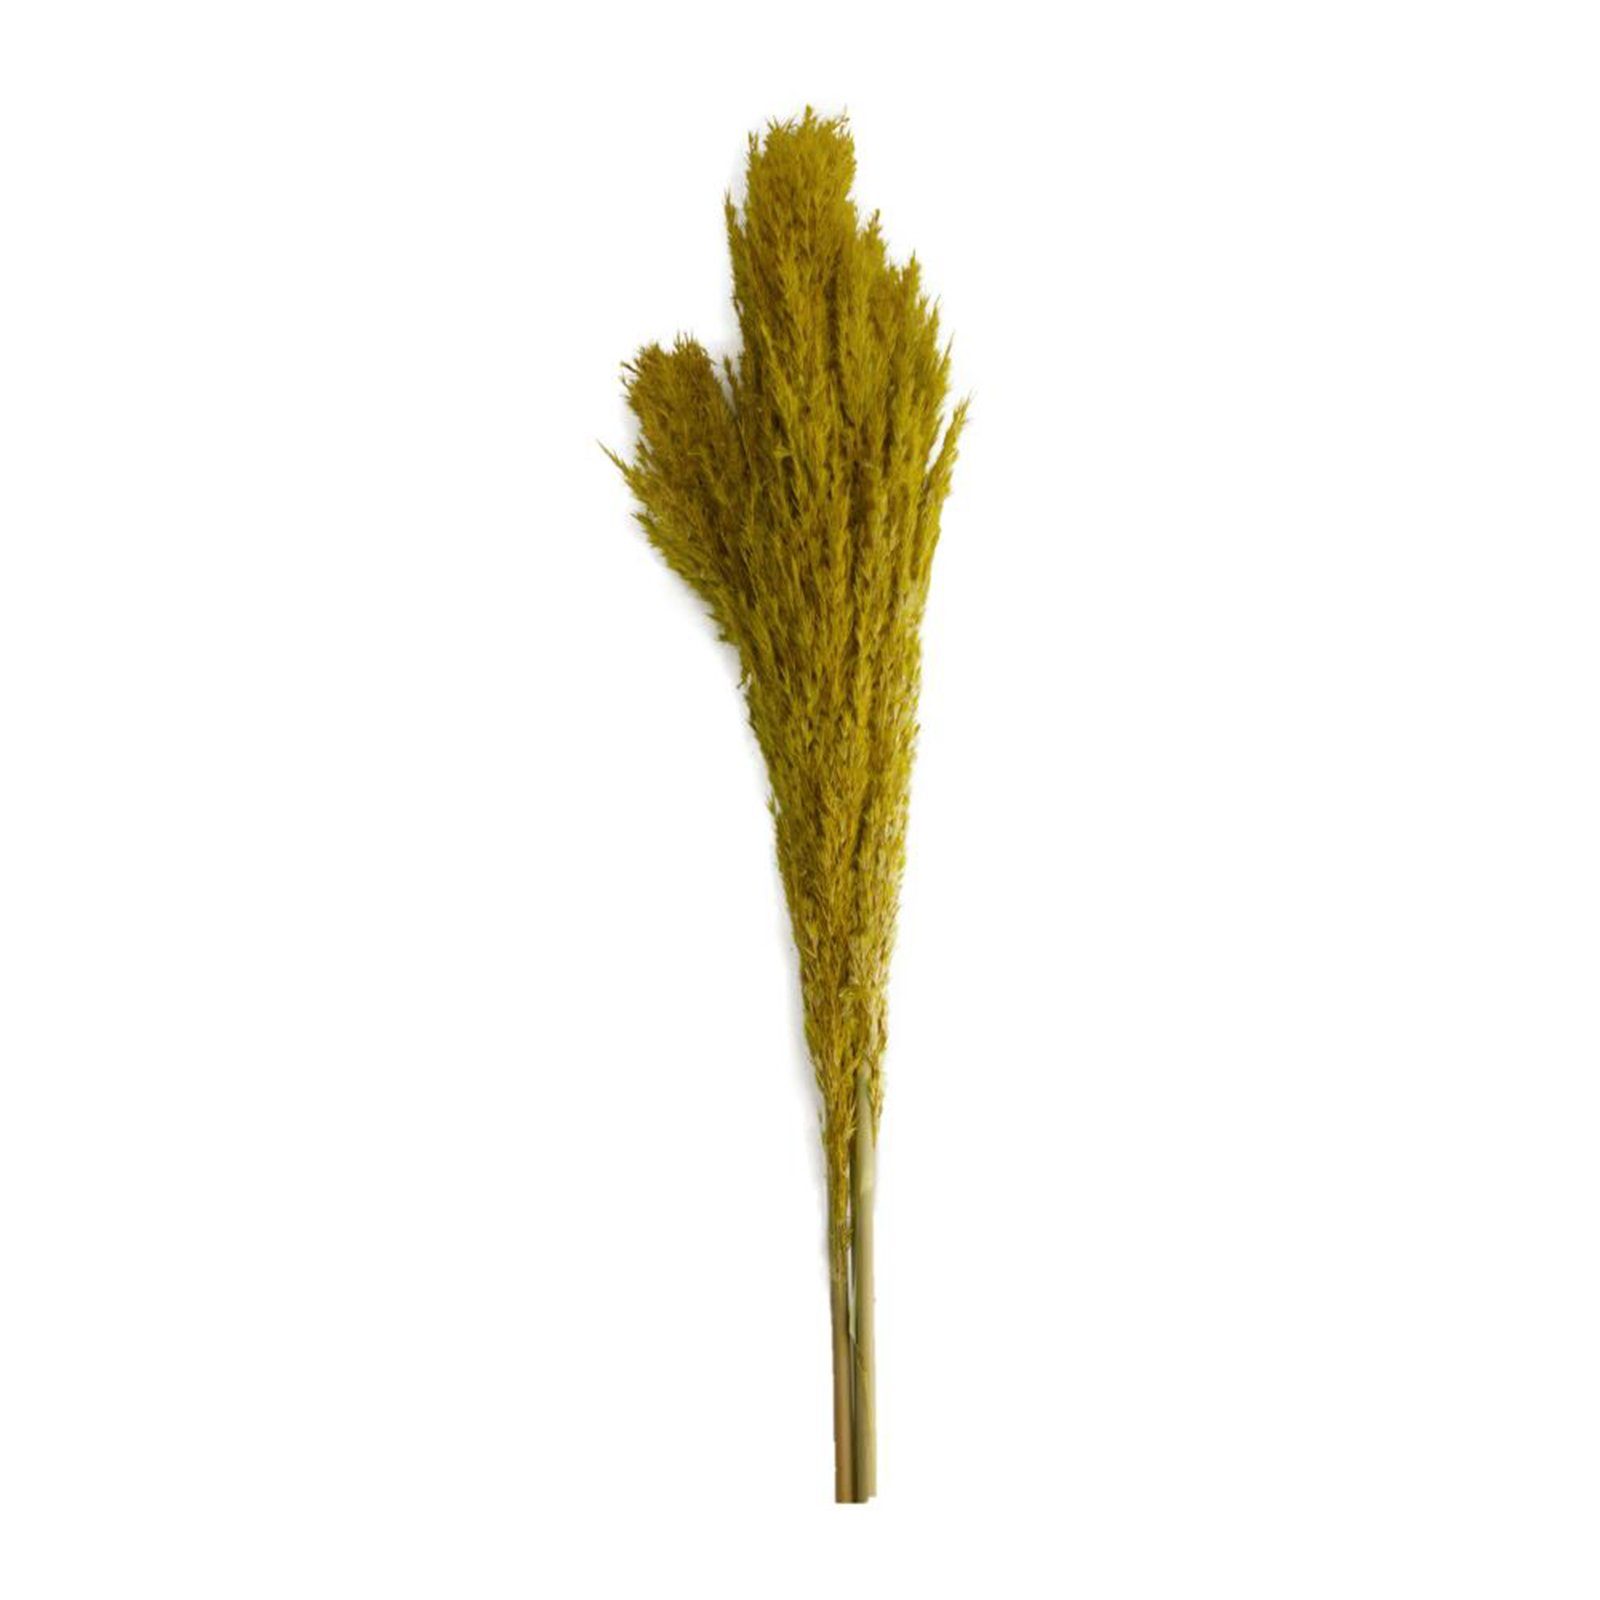 Trockenblume Pfahlrohr gelb - Wild reed plume - Arundo donax - 115 cm - 3 Stück, DIJK